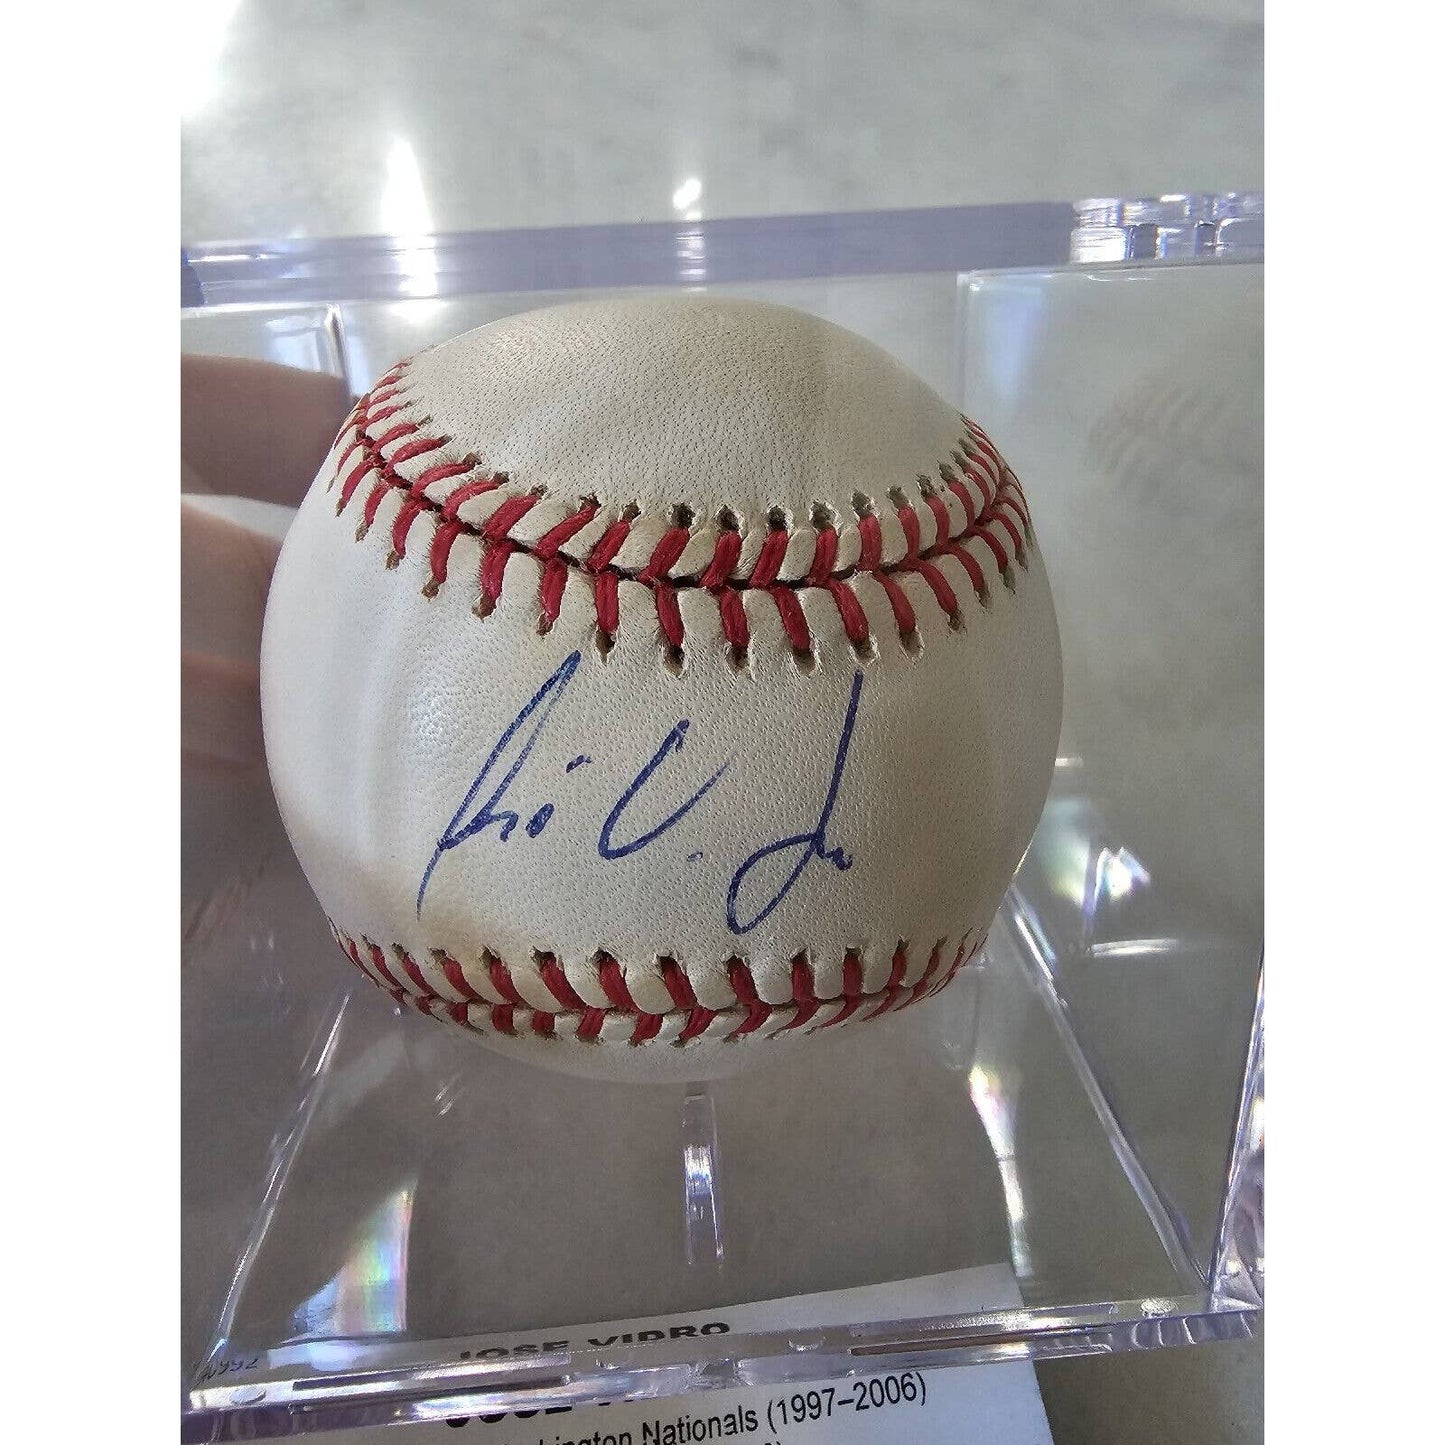 Jose Vidro Autographed/Signed Baseball TRISTAR